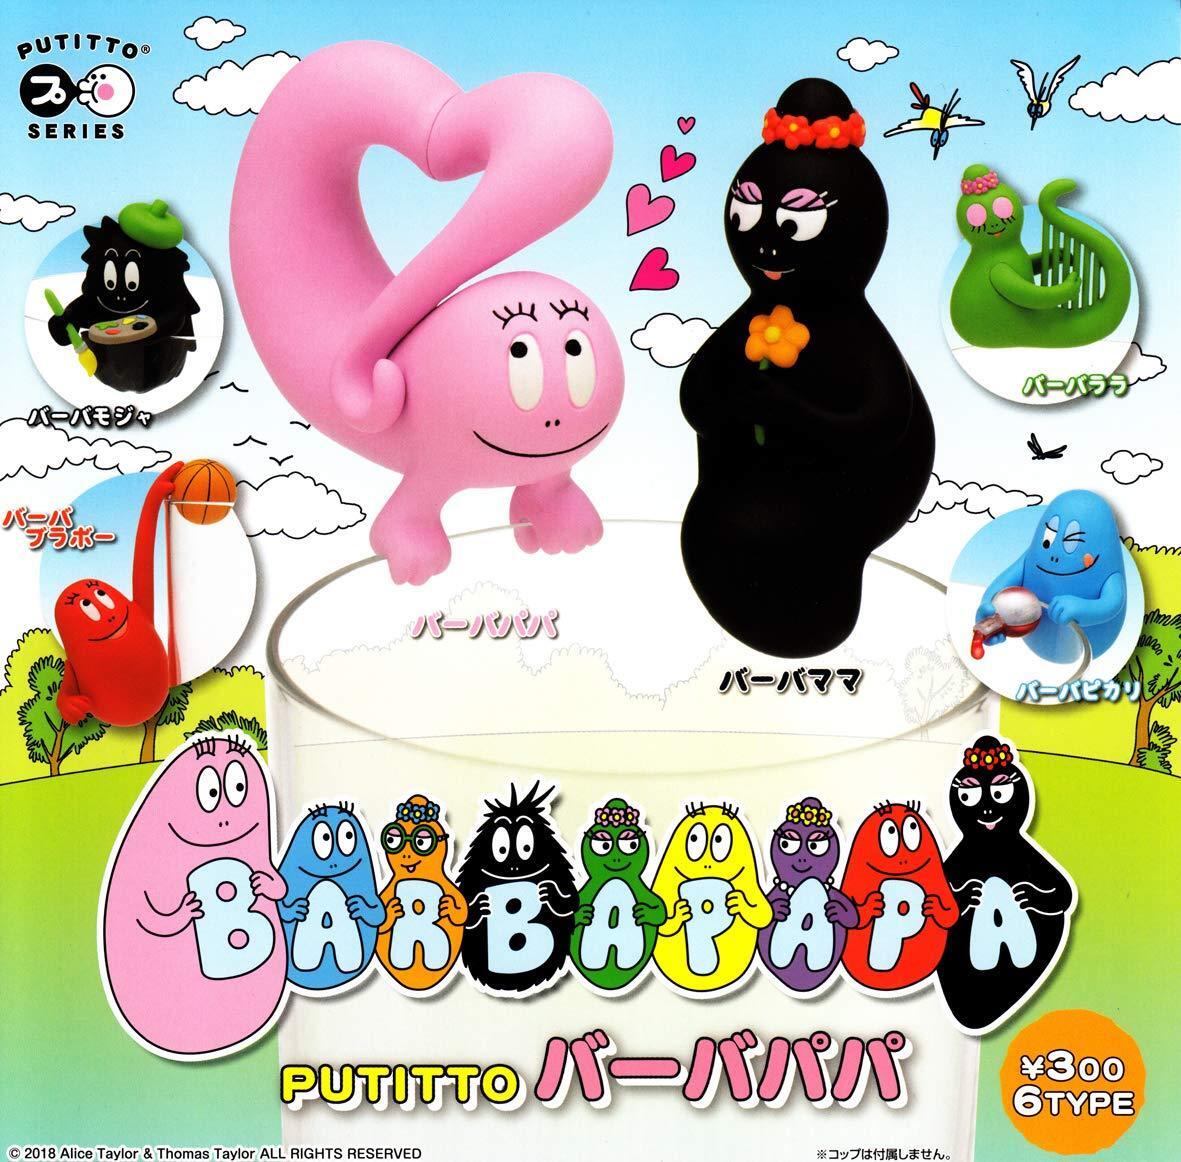 Kitan club PUTITTO Barbapapa Gashapon 6 set mini figure Capsule toys | eBay